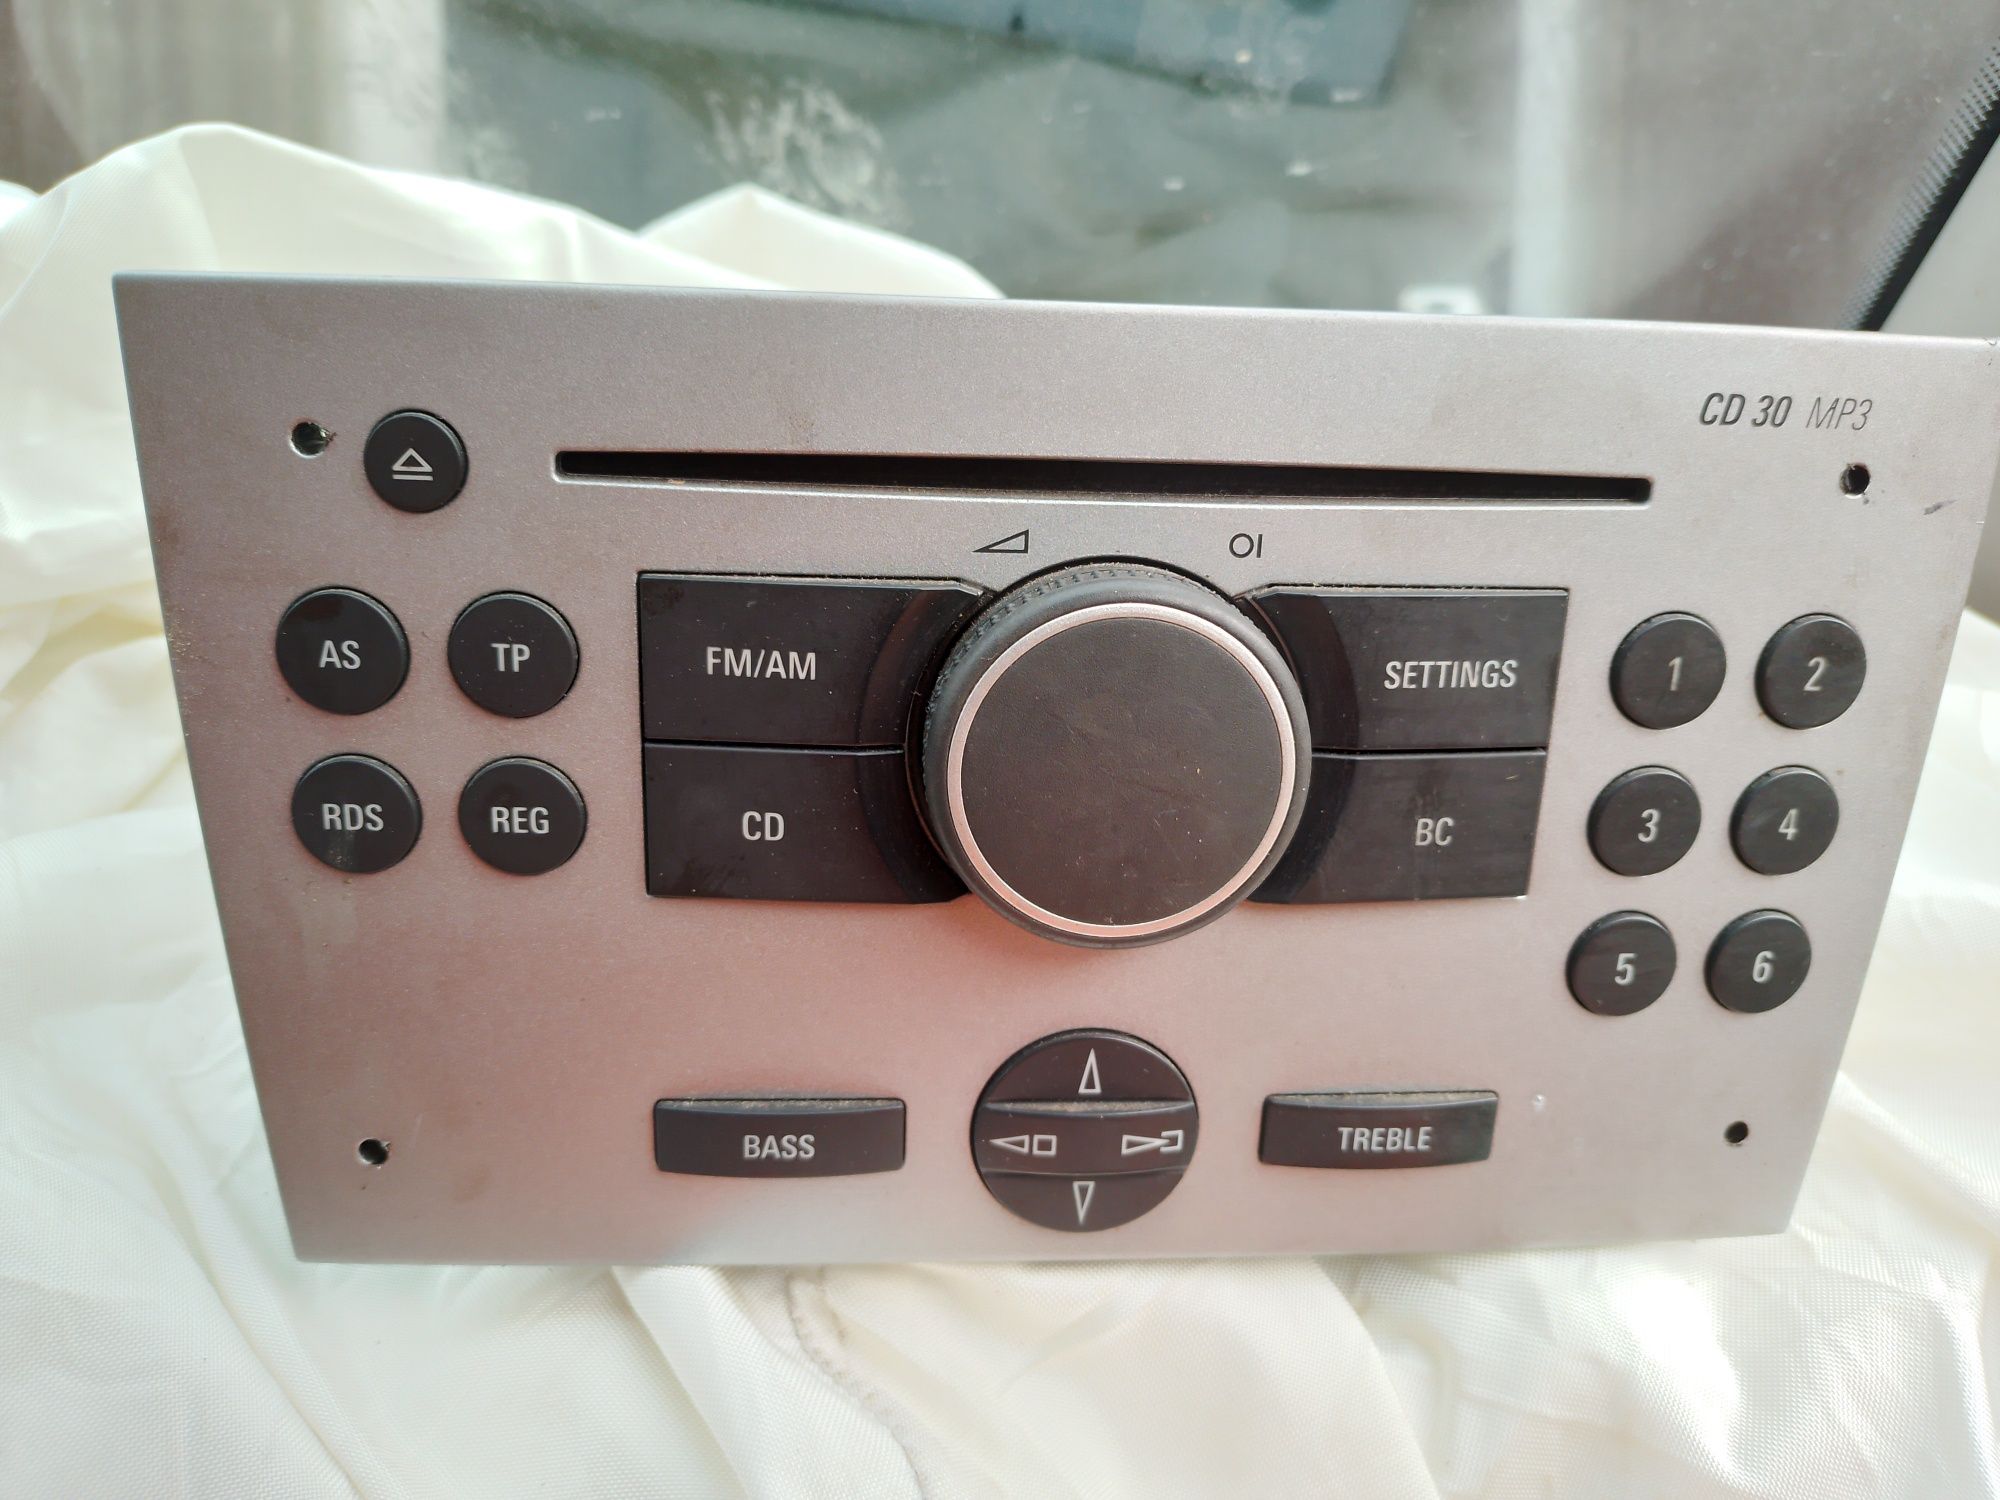 Radioodtwarzacz CD30 Corsa 2005r